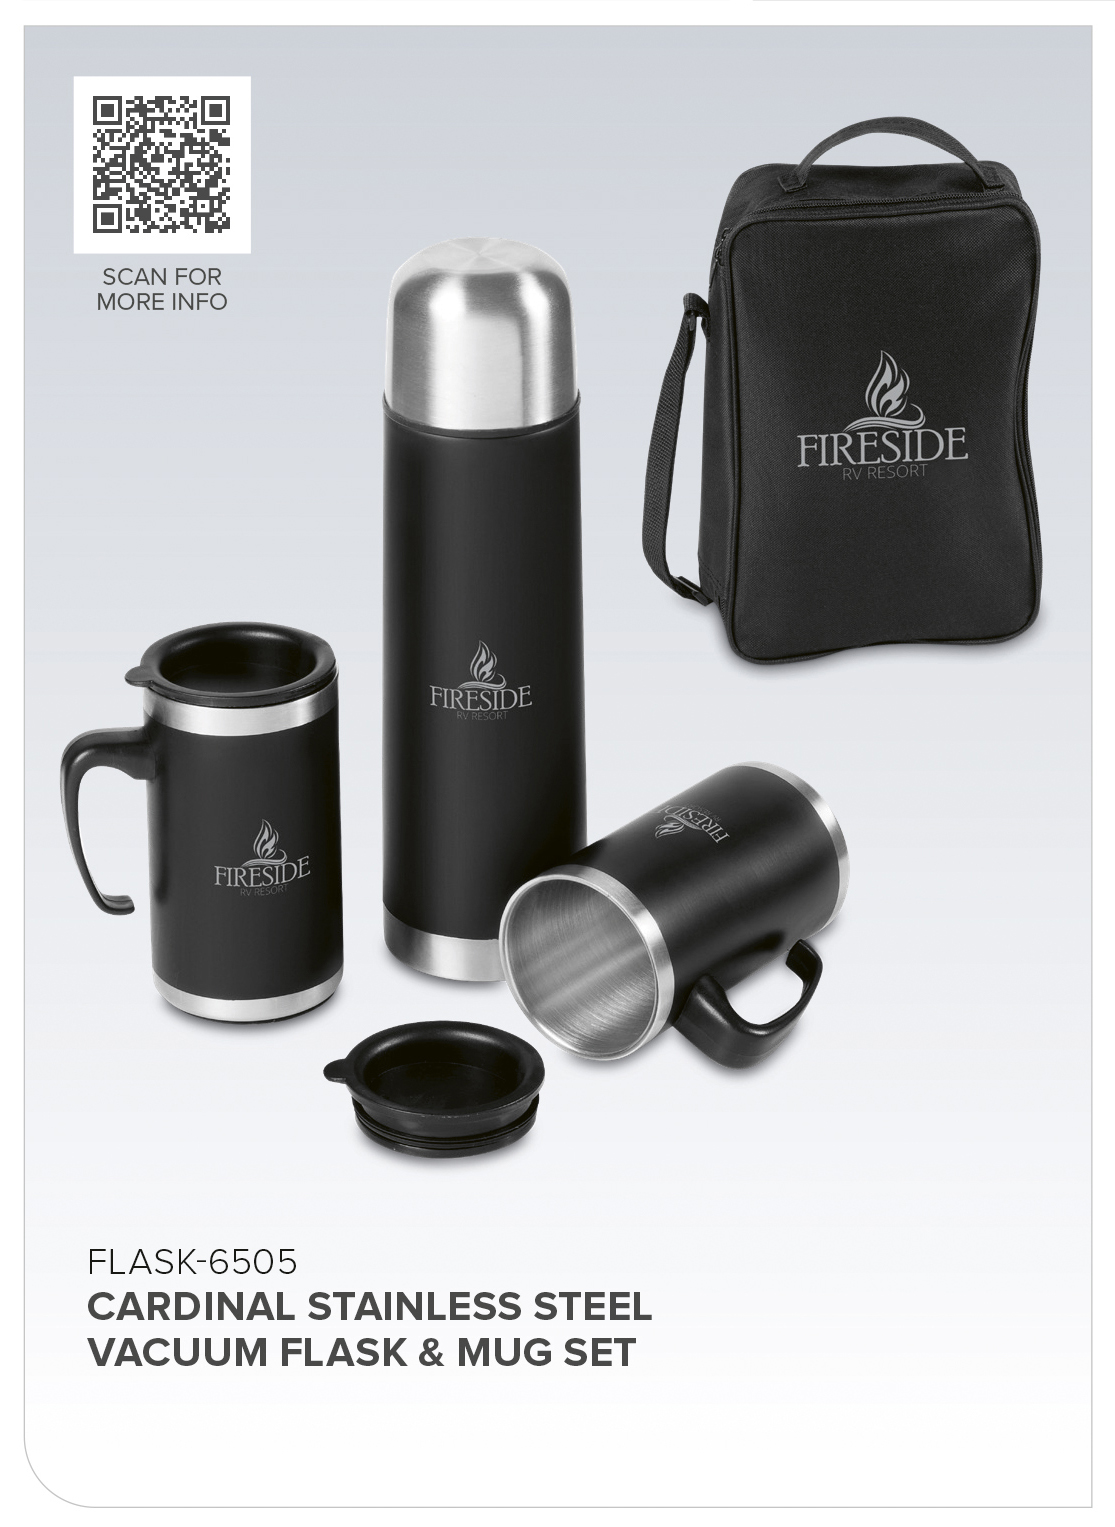 FLASK-6505 - Cardinal Stainless Steel Vacuum Flask & Mug Set - Catalogue Image